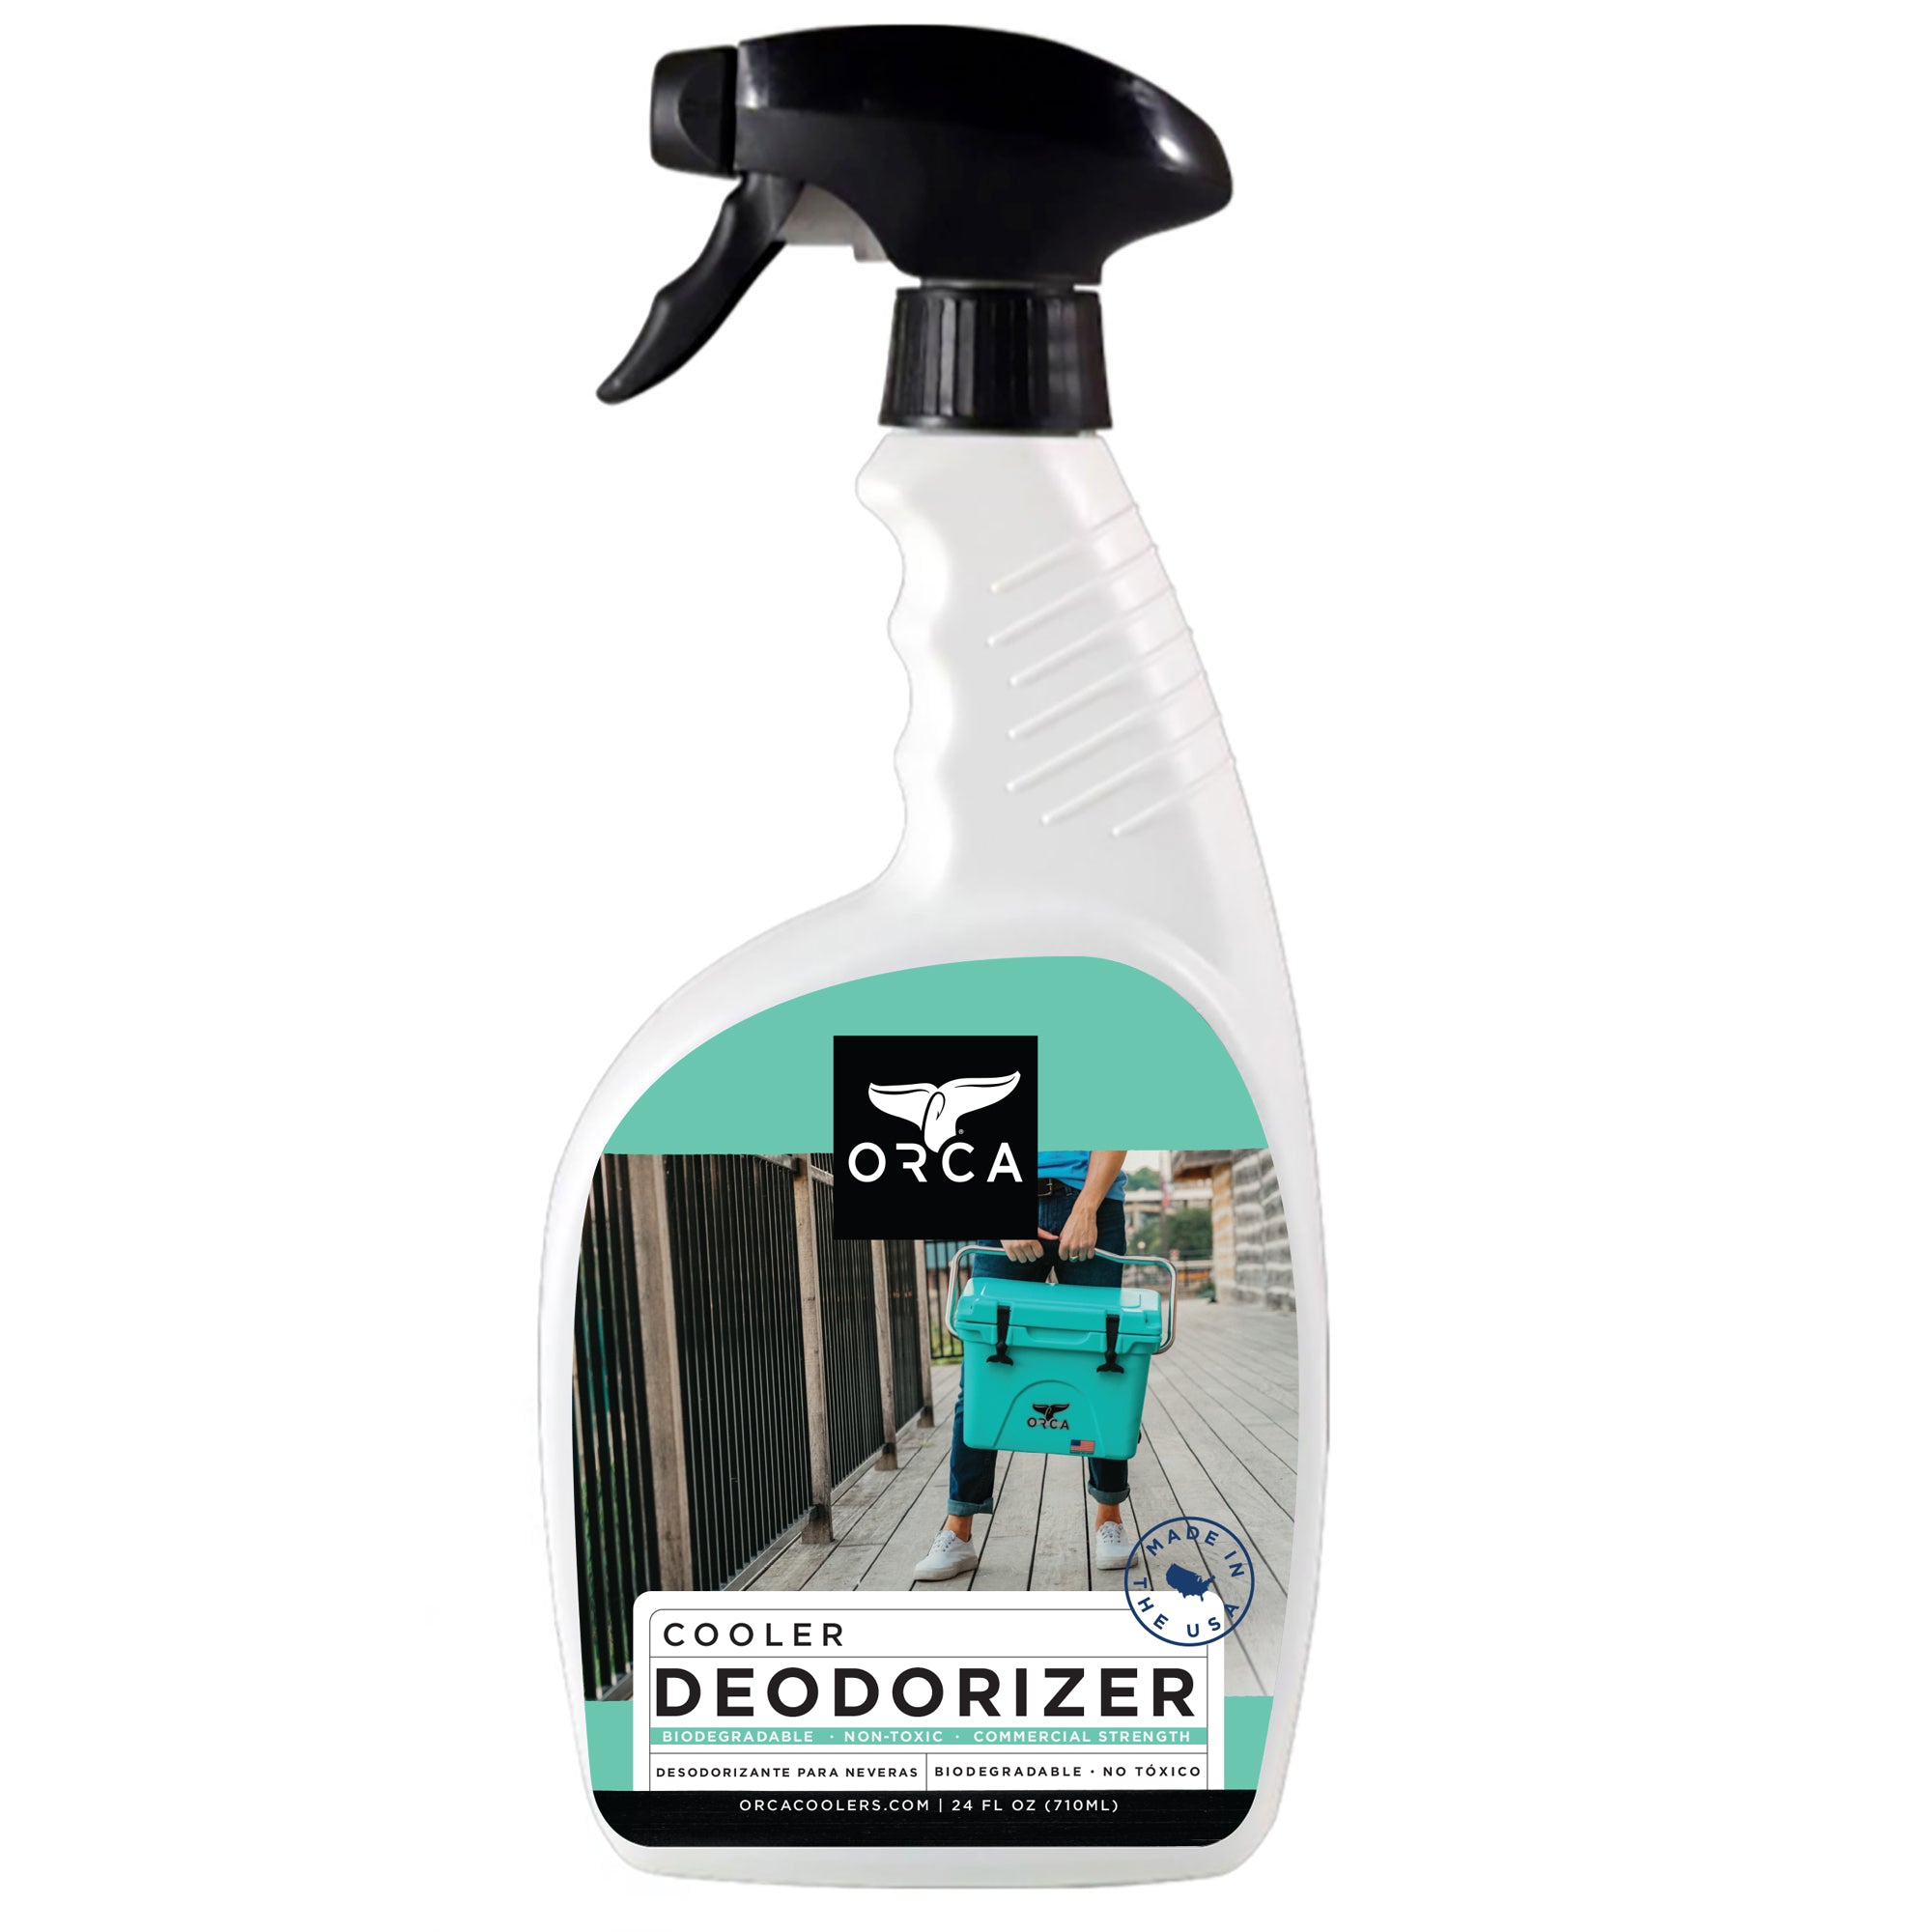 ORCA Cooler Deodorizer - ORCA